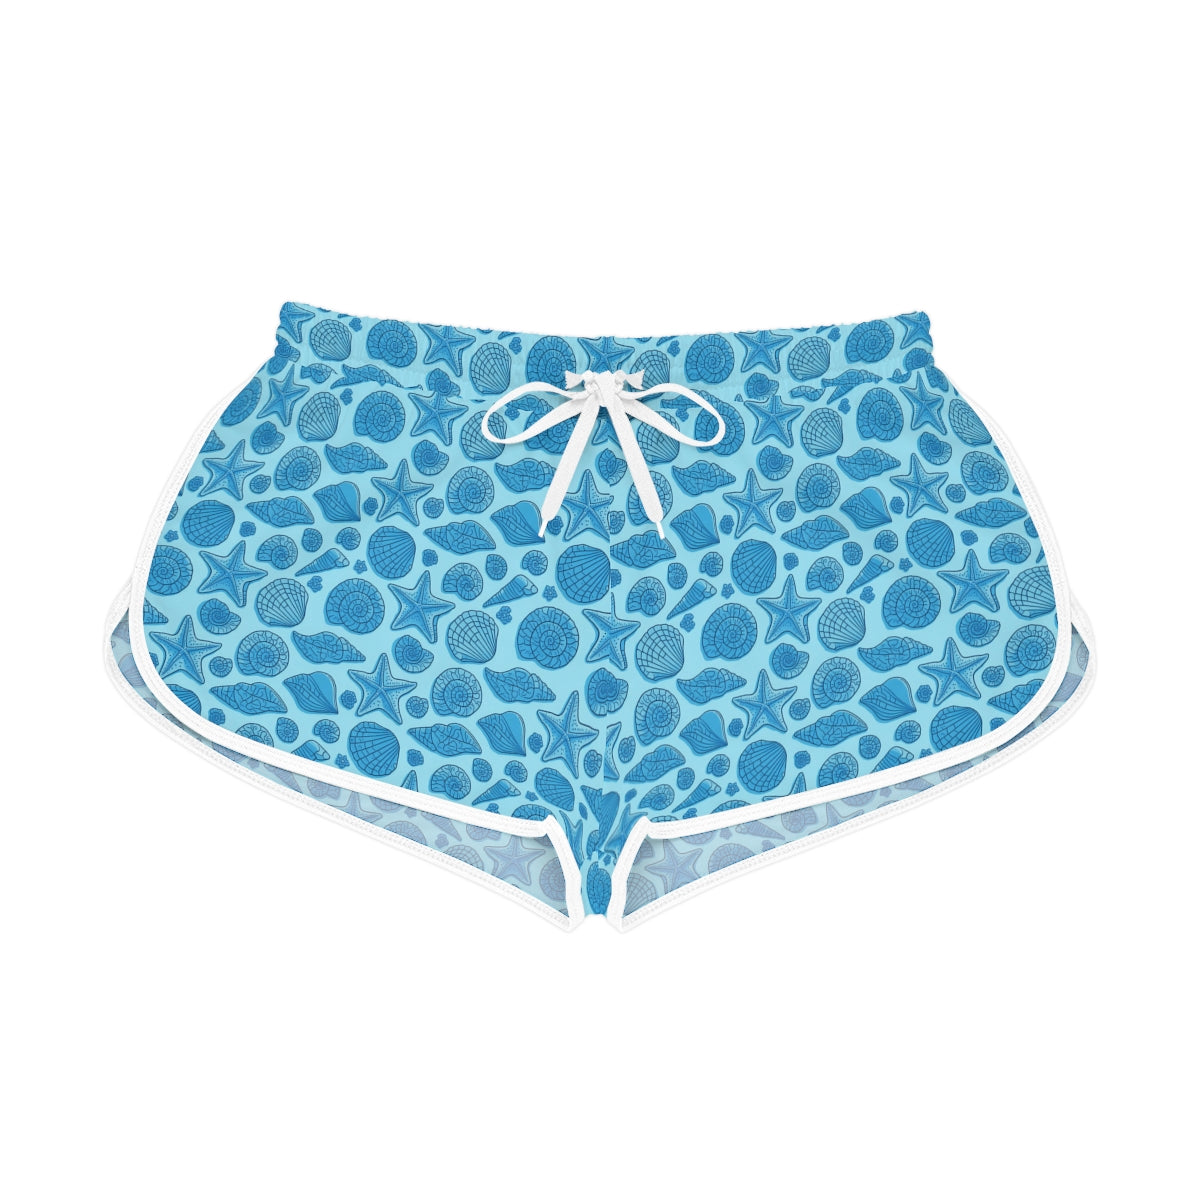 Blue Mermaid Seashell Women's relaxed fit Shorts - Ocean Inspired Design